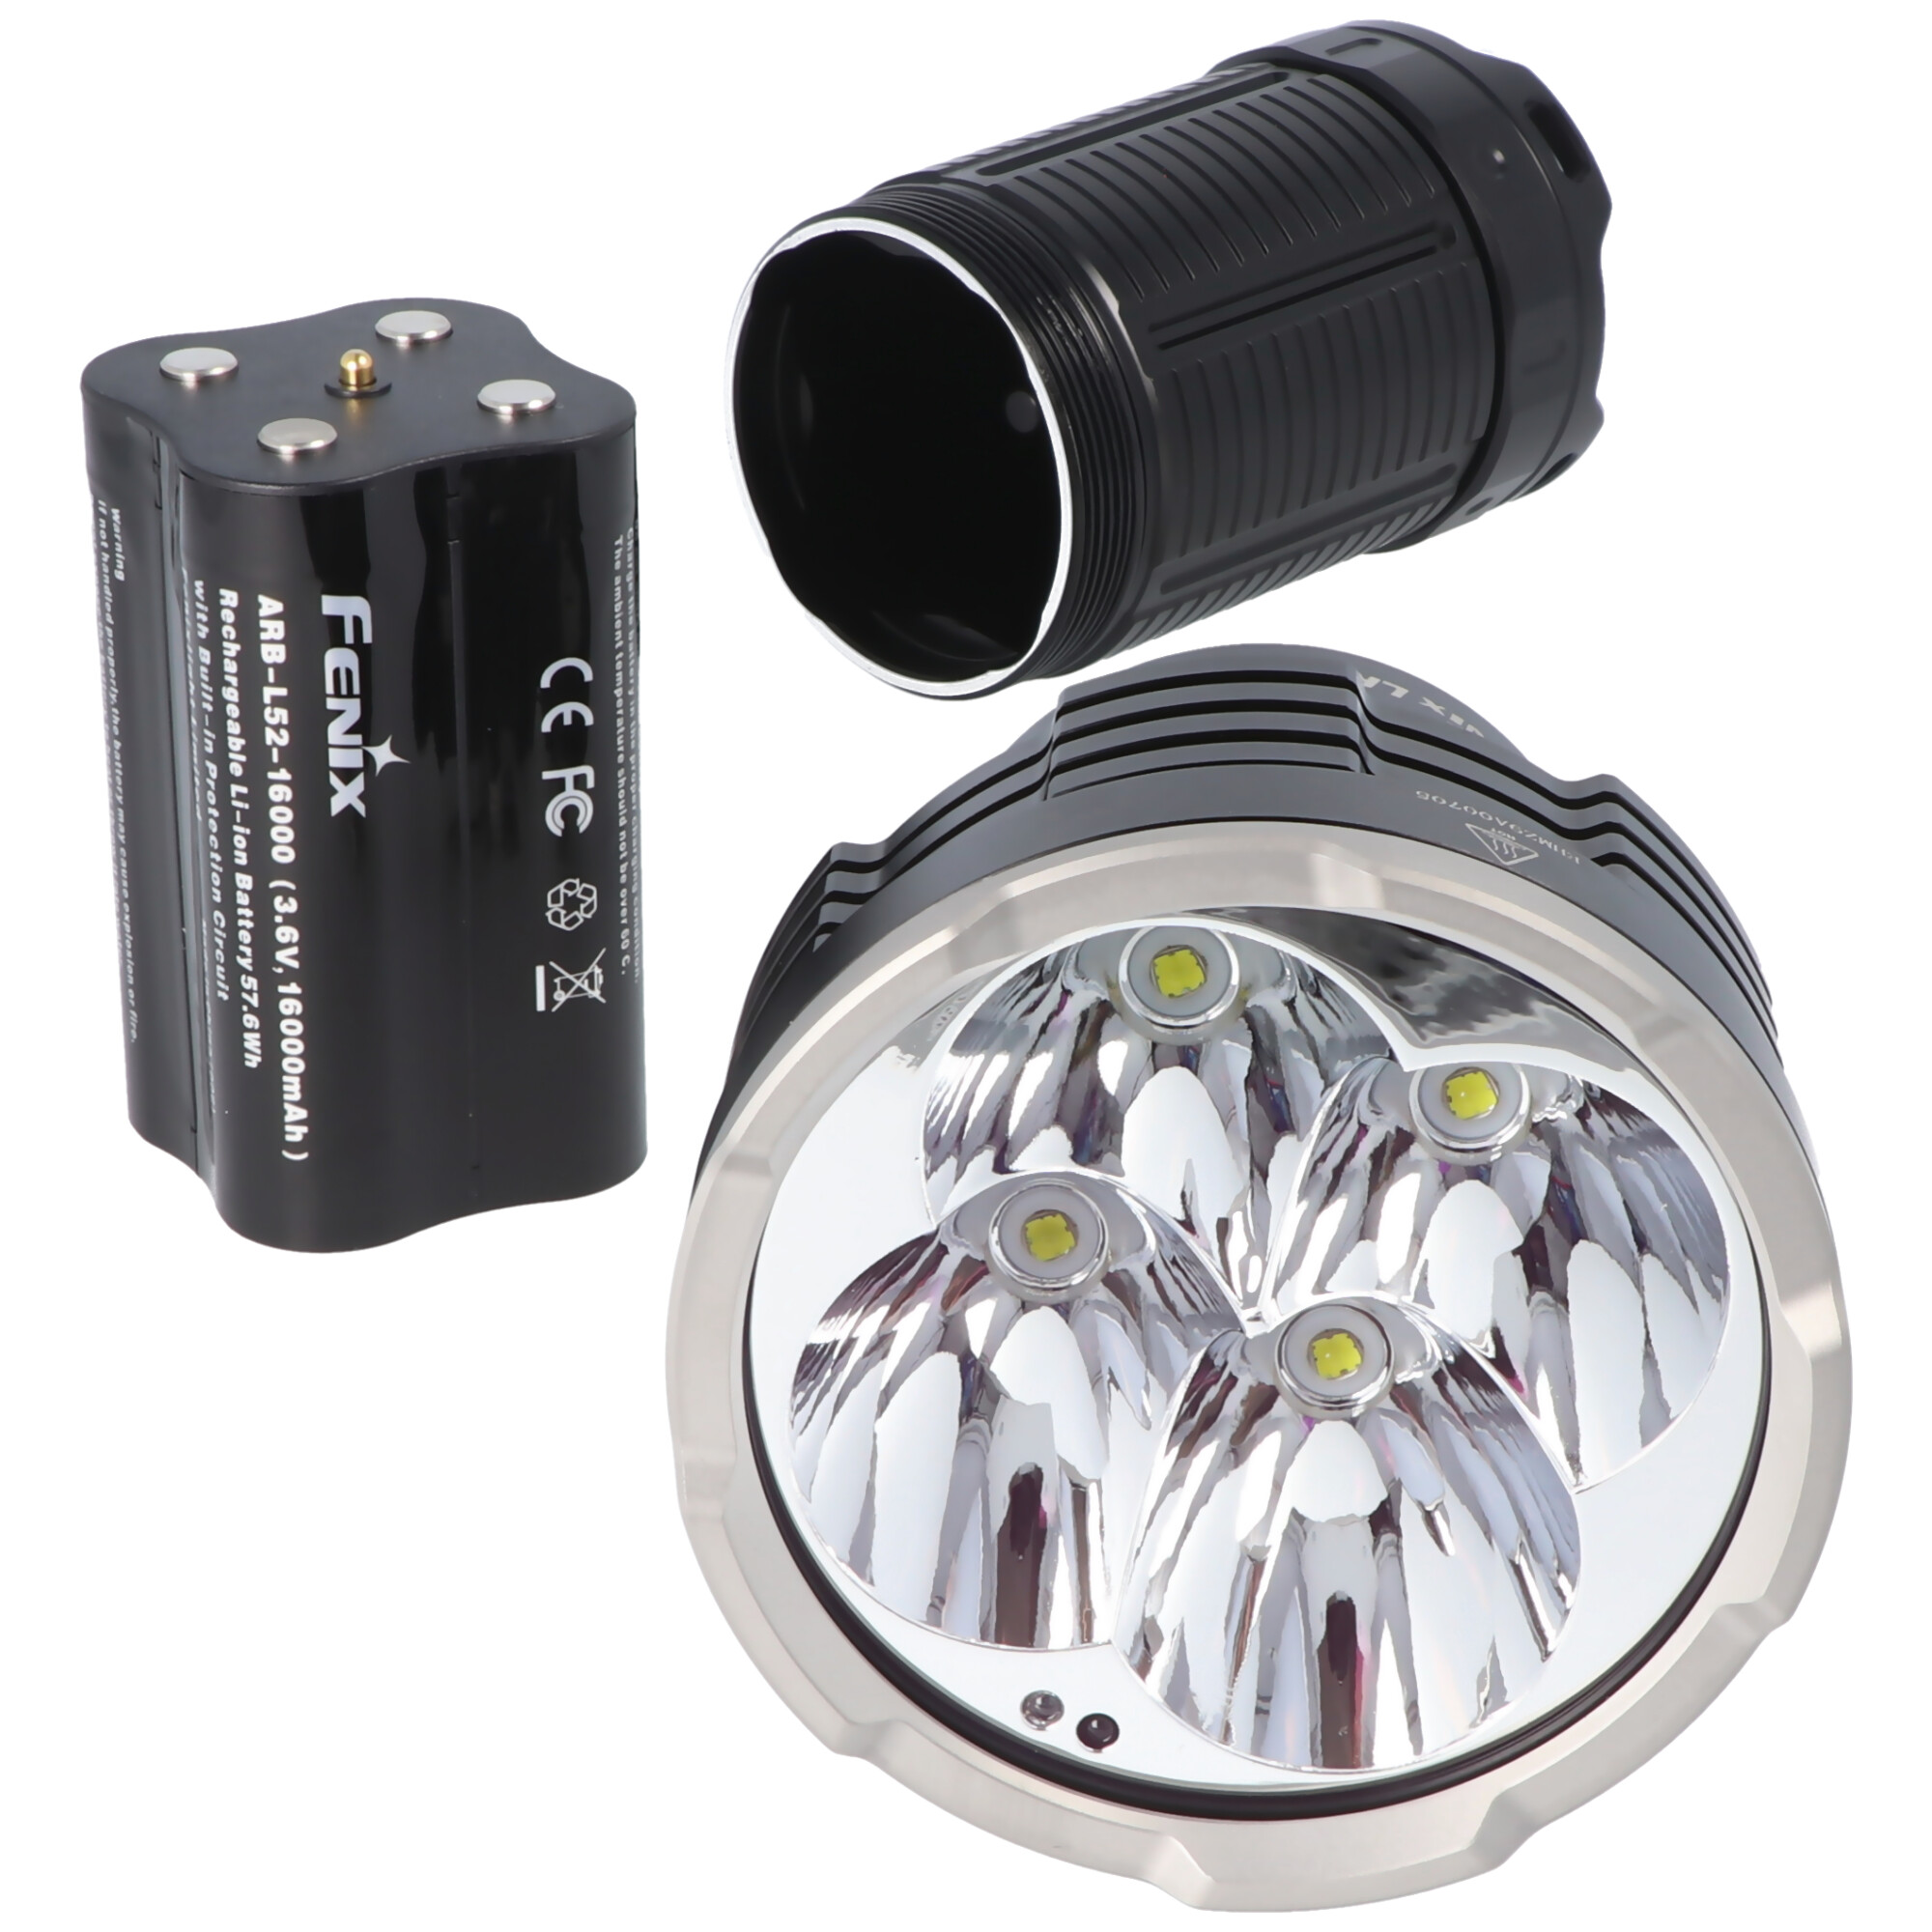 Fenix LR50R LED-Taschenlampe TK75, 12000 Lumen, 950 Meter Reichweite, USB-C Ladeport, Powerbank Funktion, inklusive Akkupack mit 3,6V 16000mAh